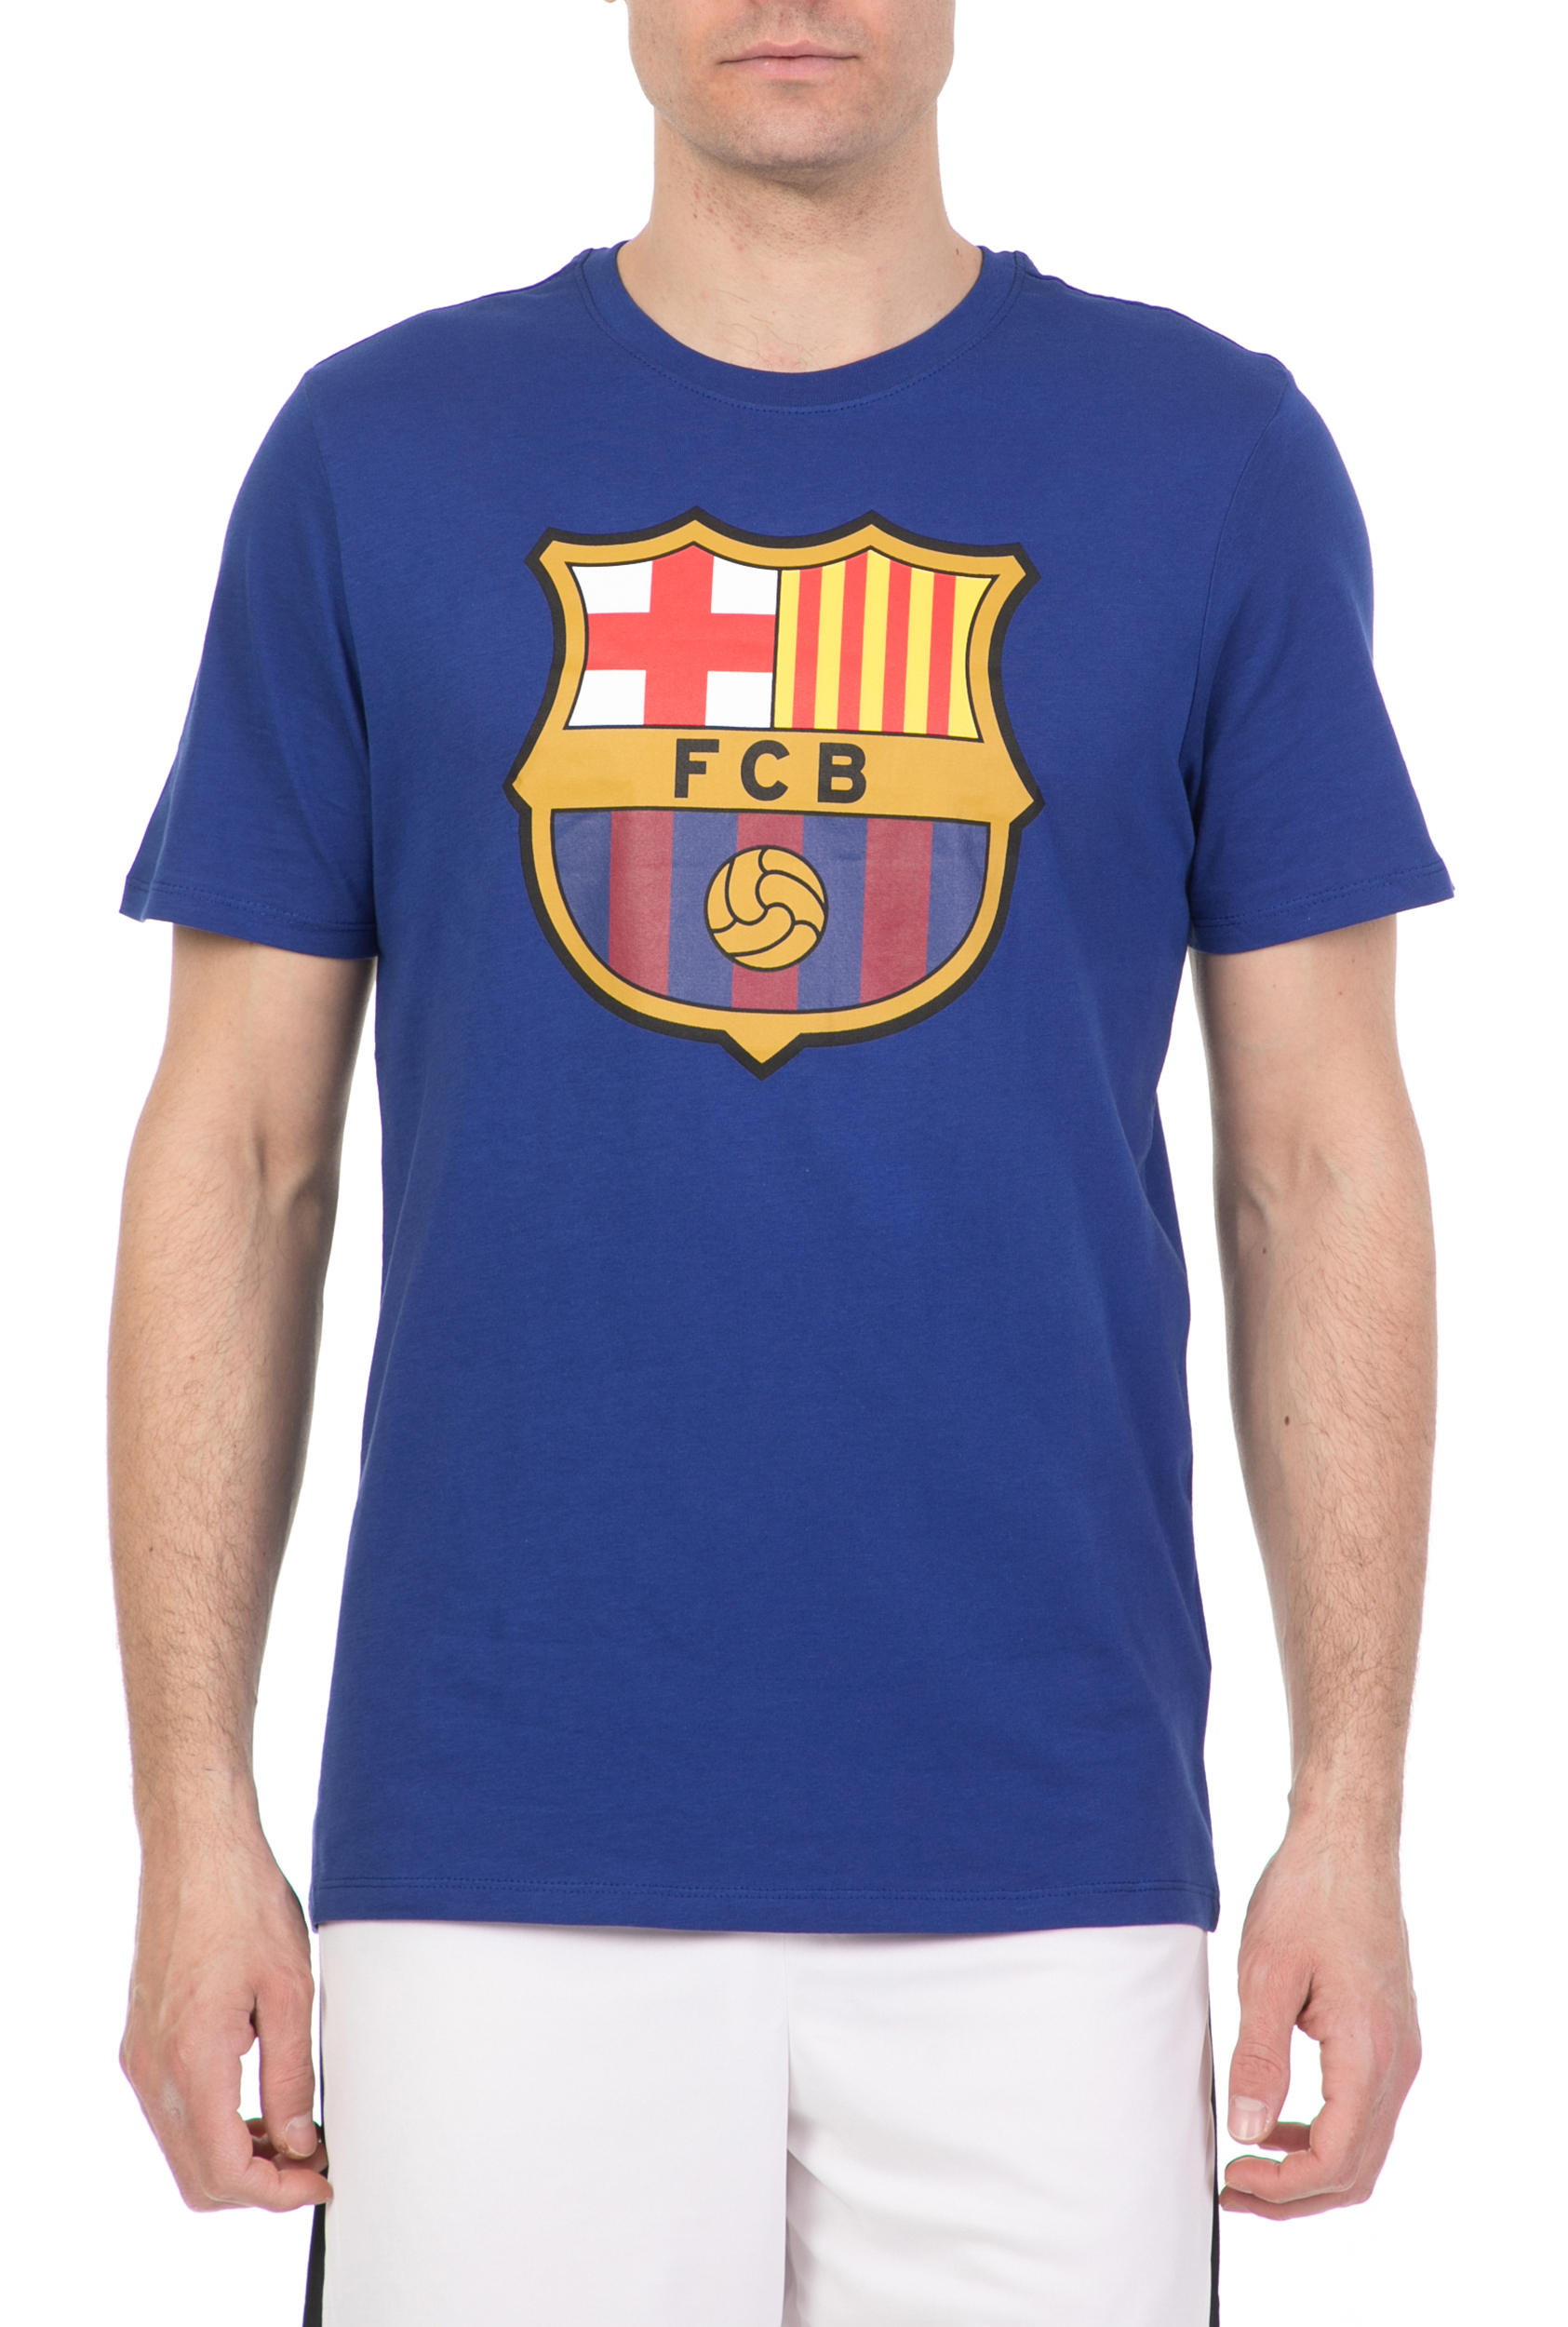 NIKE Ανδρικό αθλητικό t-shirt FCB NIKE EVERGREEN CREST μπλε